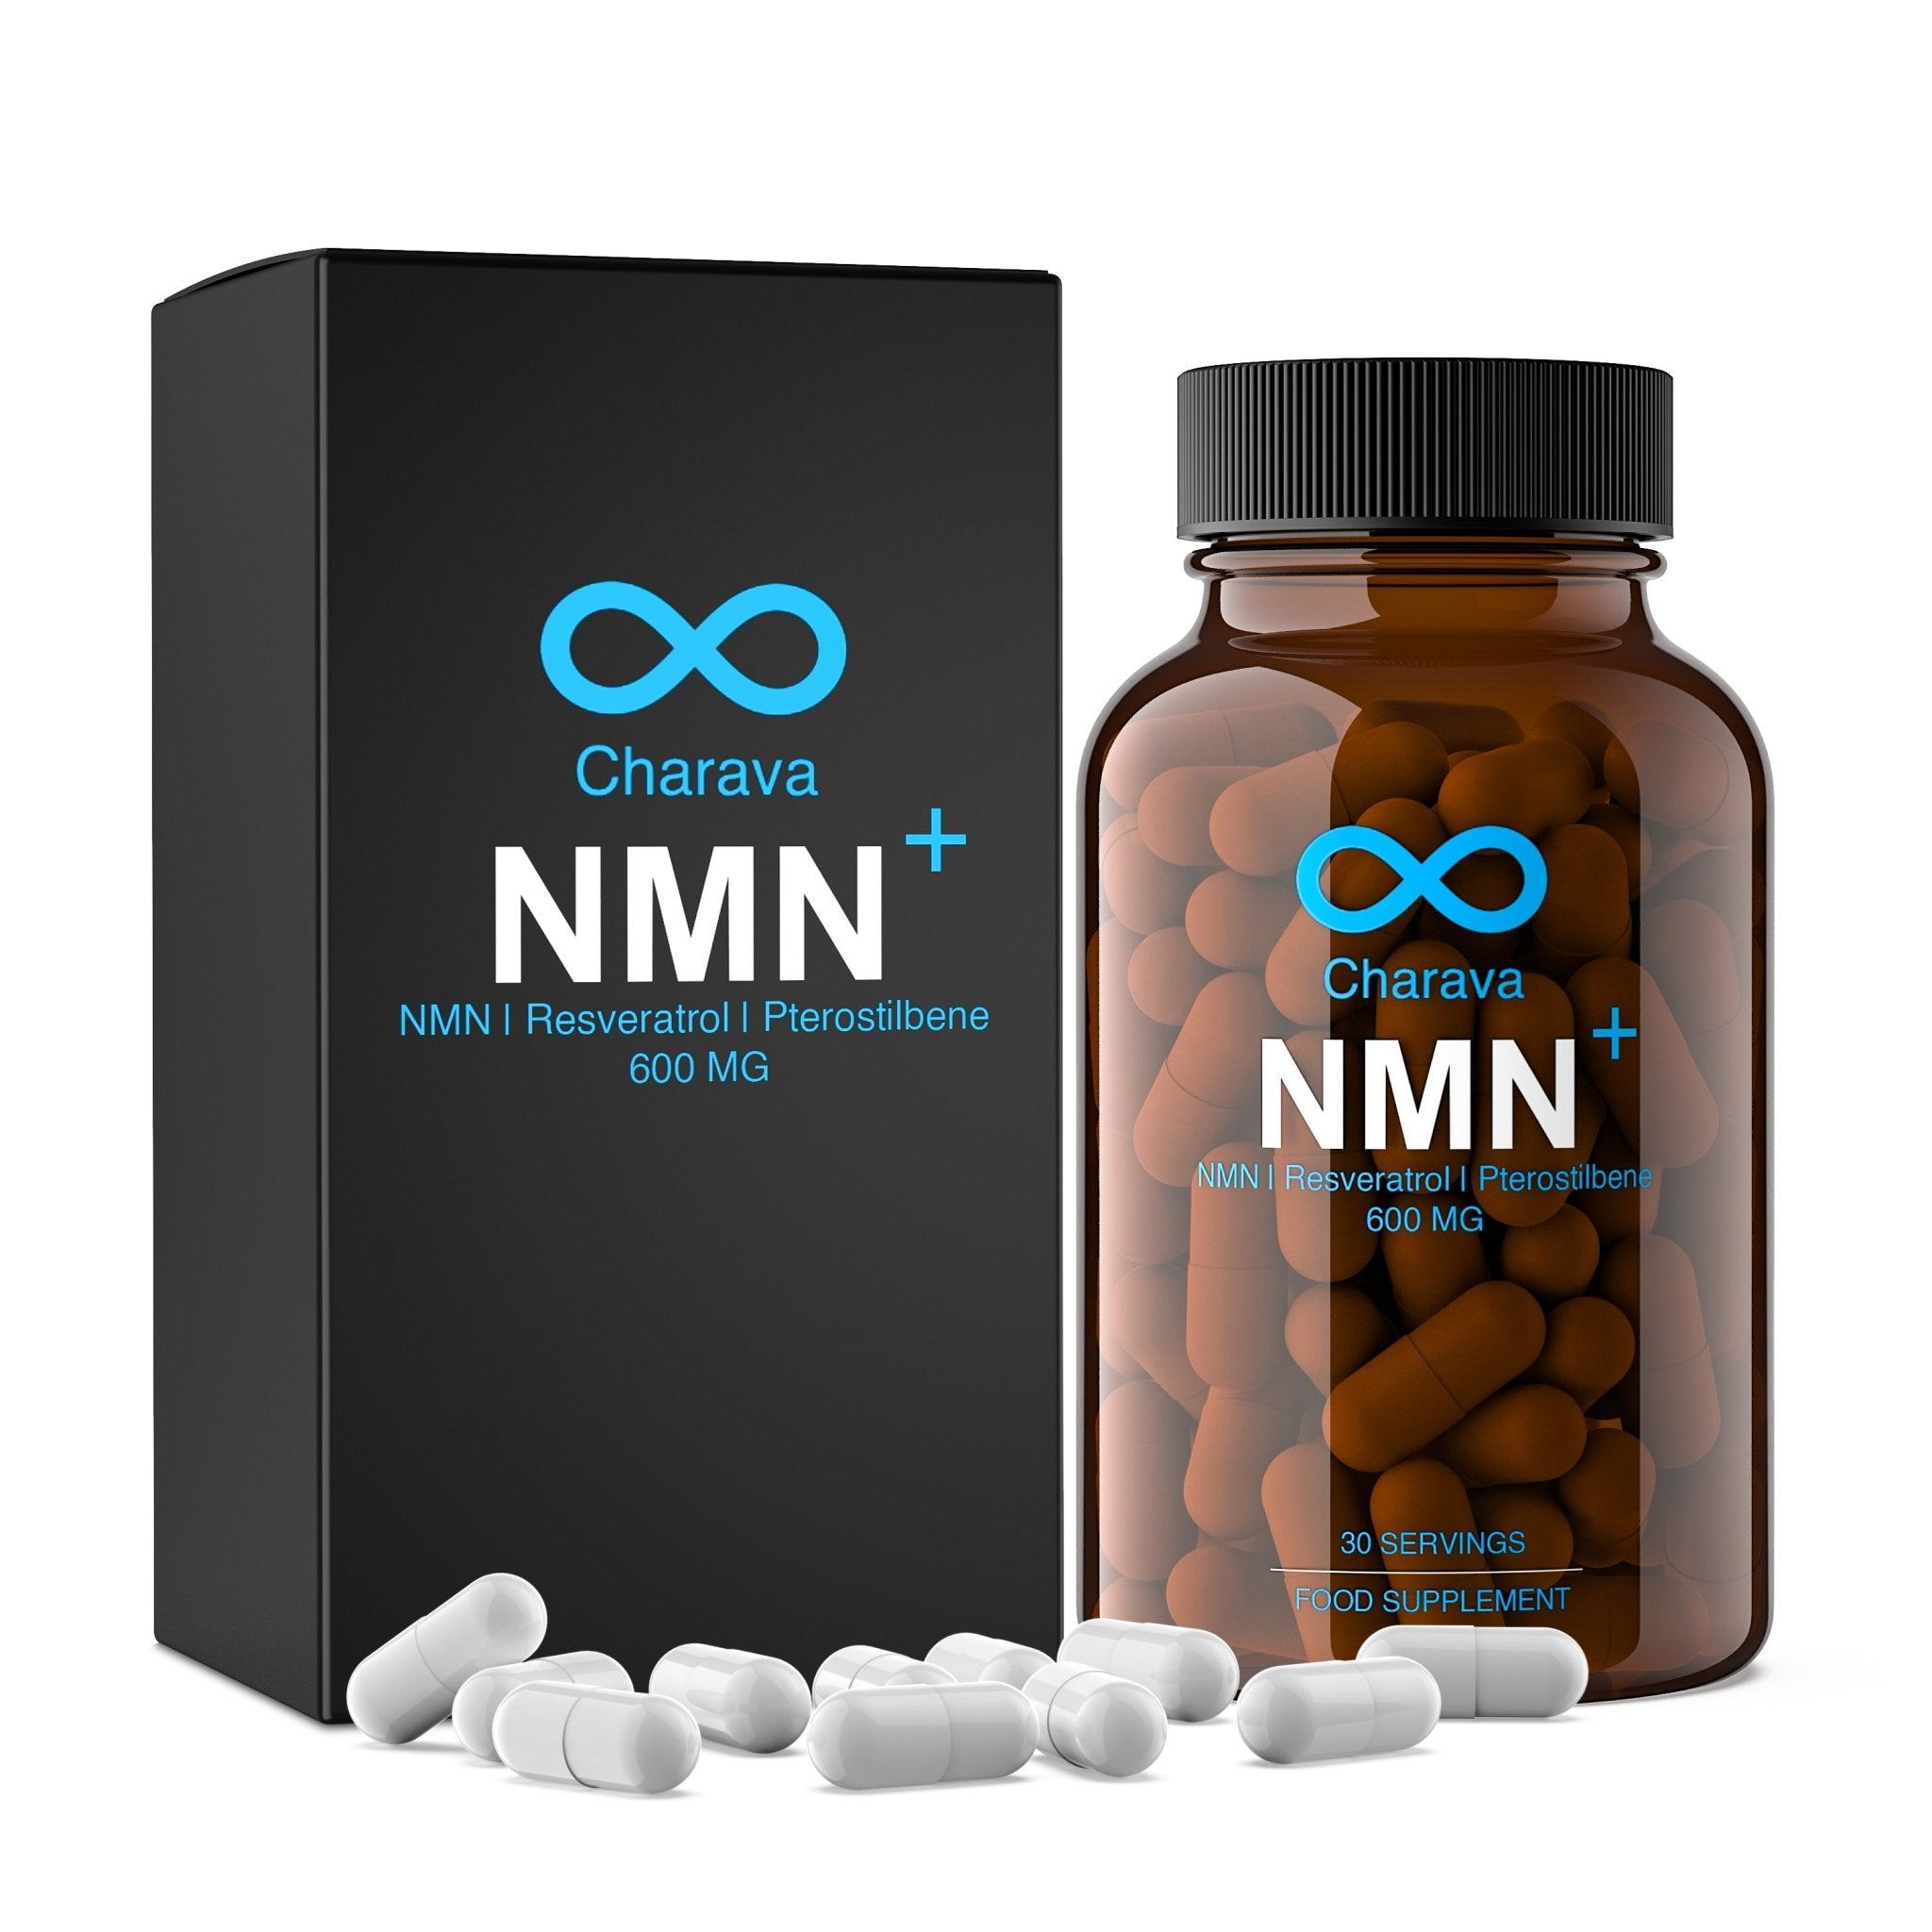 NMN+600 (NMN, Resveratrol, Pterostilbene) - Charava UK